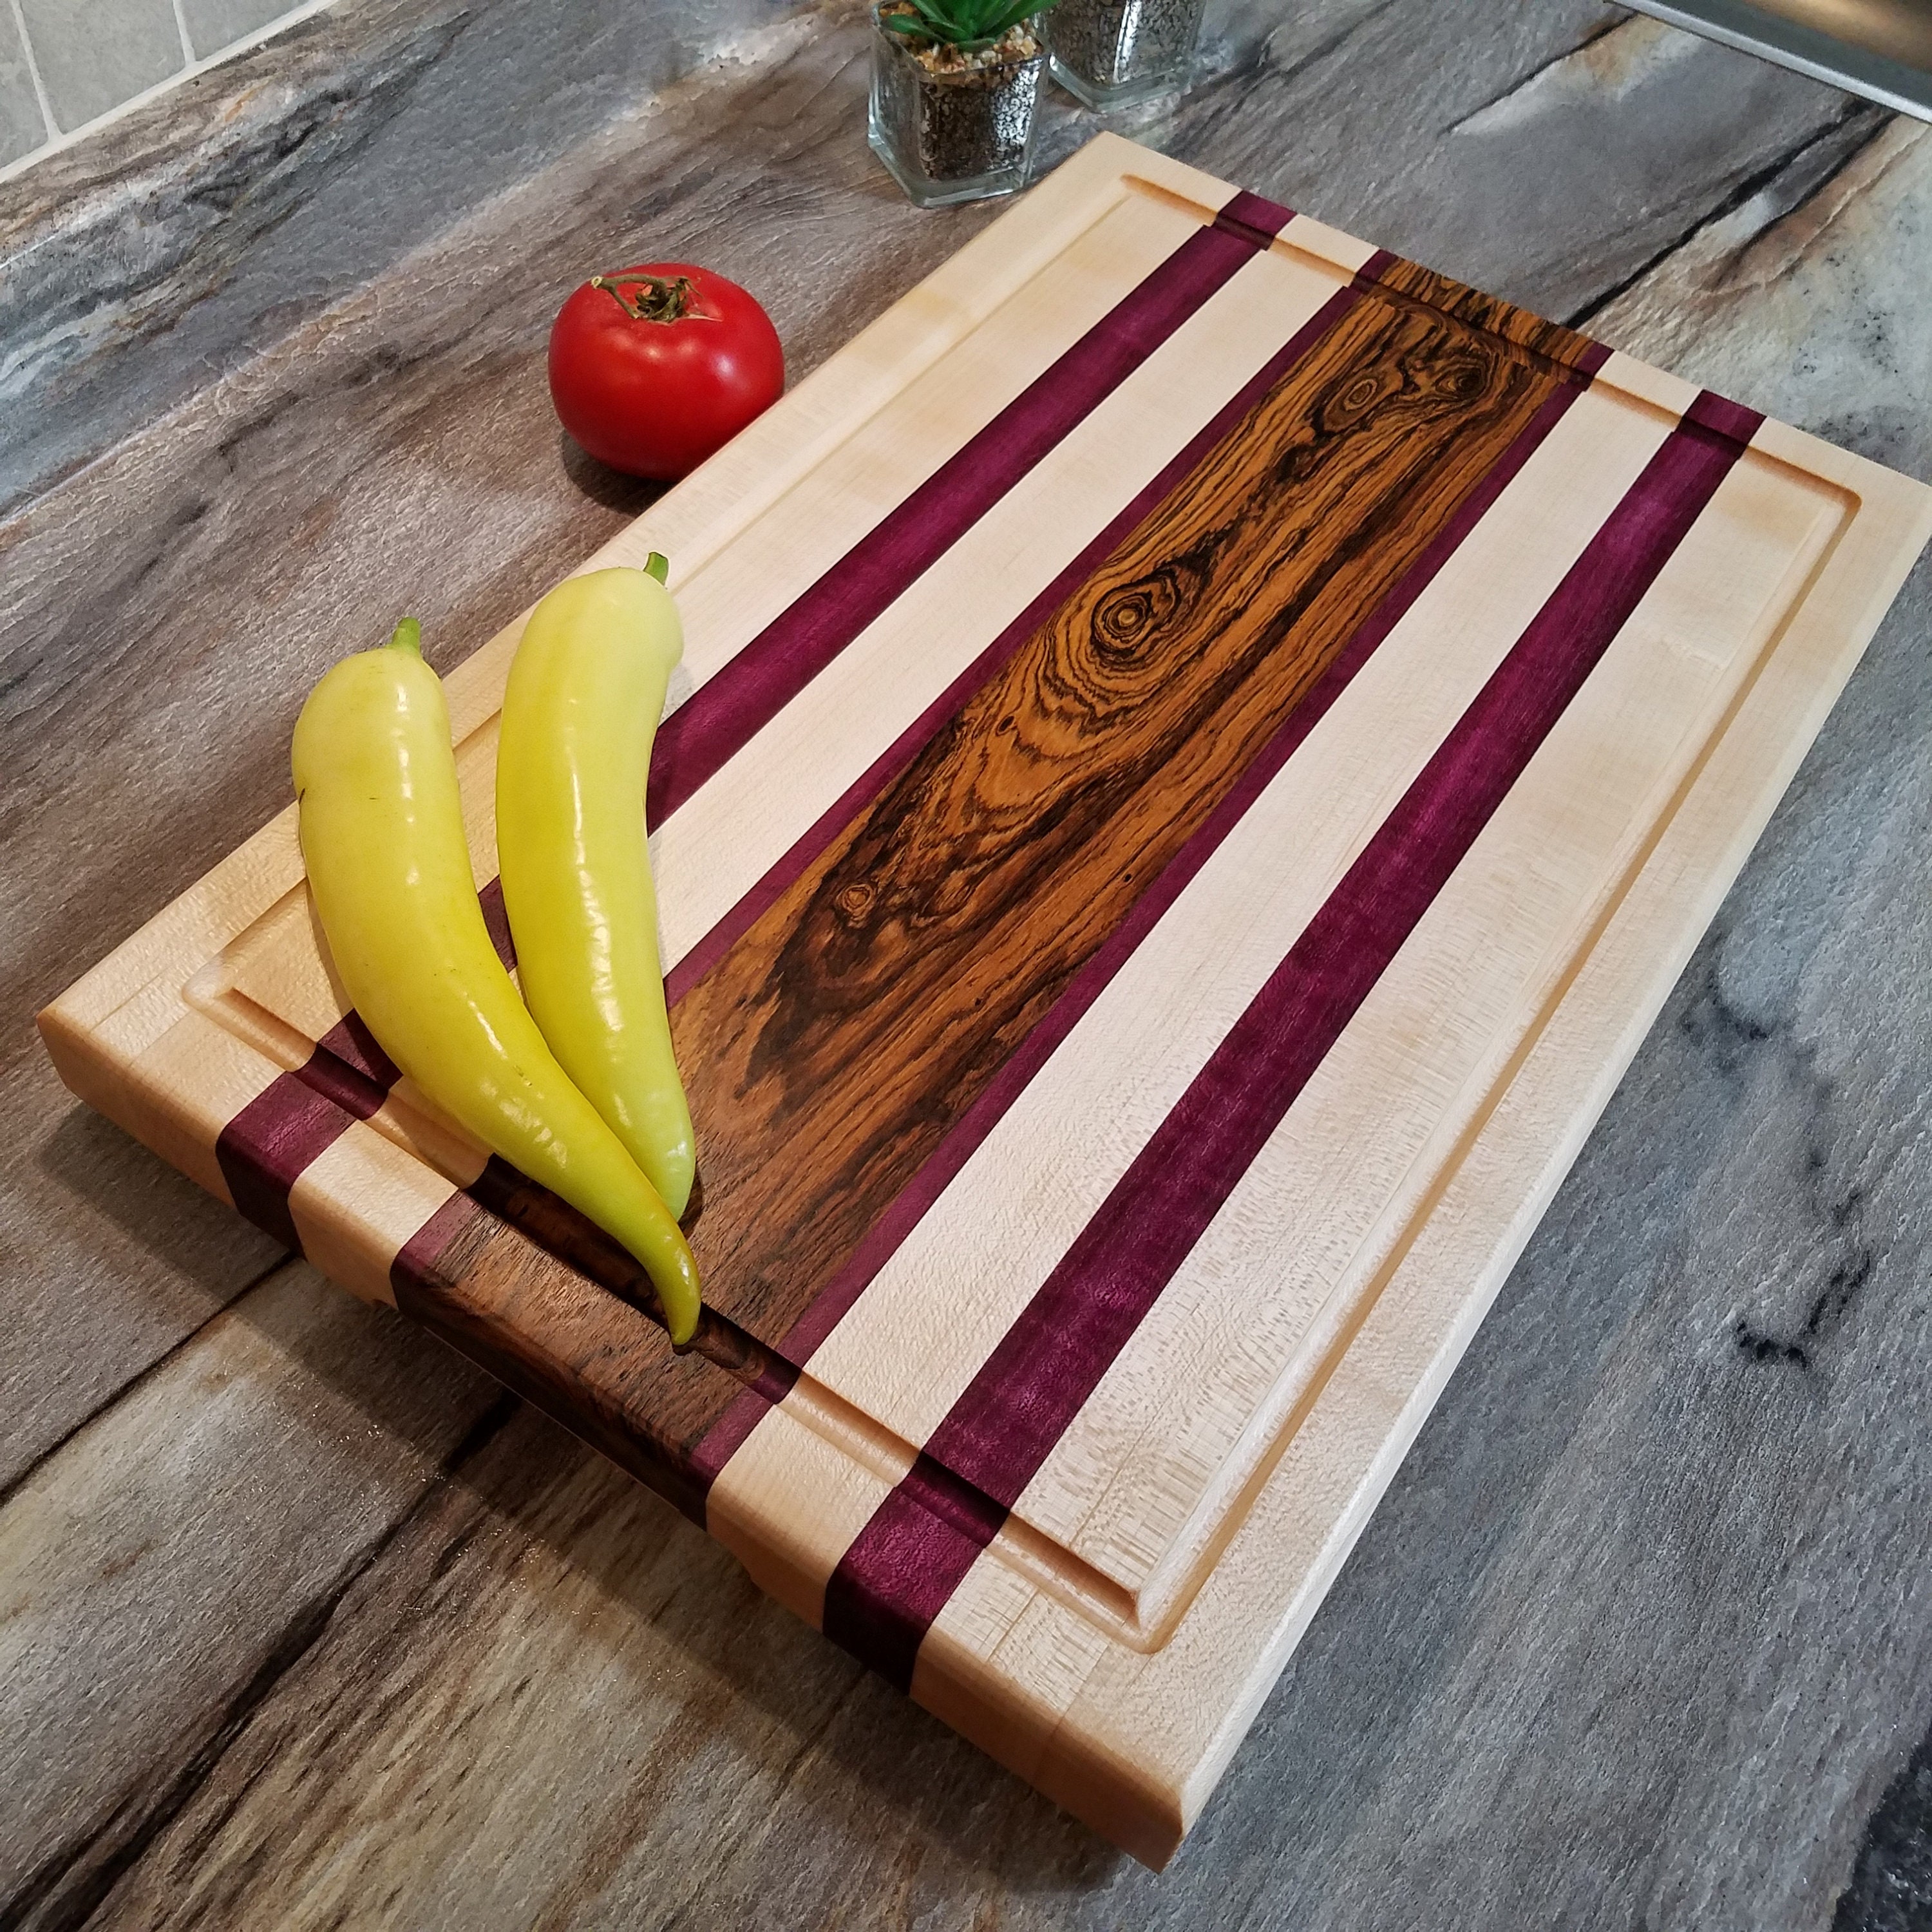 Woodcraft Woodshop - Exotic Cutting Board Kit - 1-1/2 x 9-7/8 x